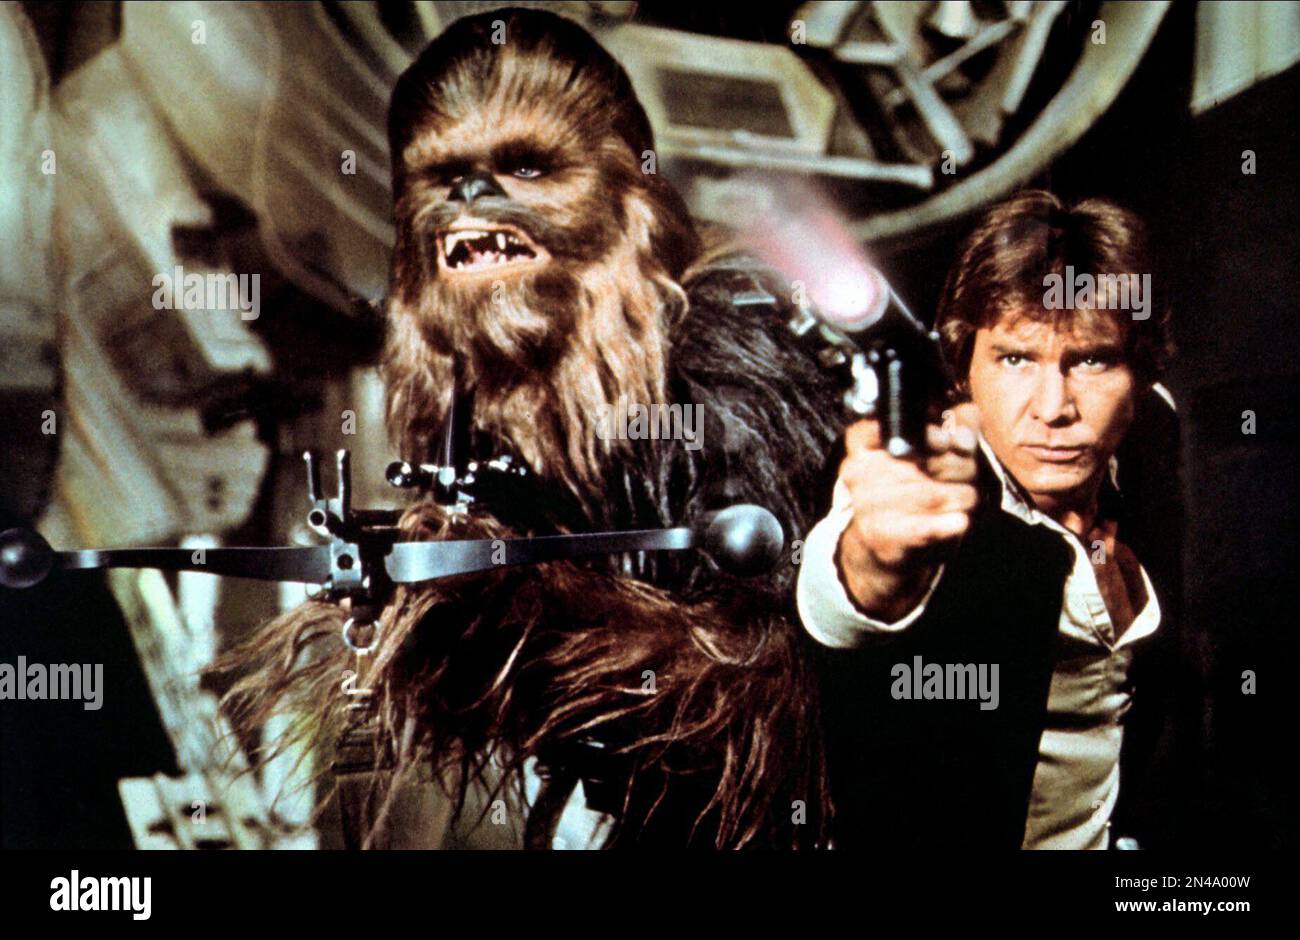 Star Wars Star Wars episodio IV : A New Hope Peter Mayhew & Harrison Ford Chewbacca & Han solo Foto Stock